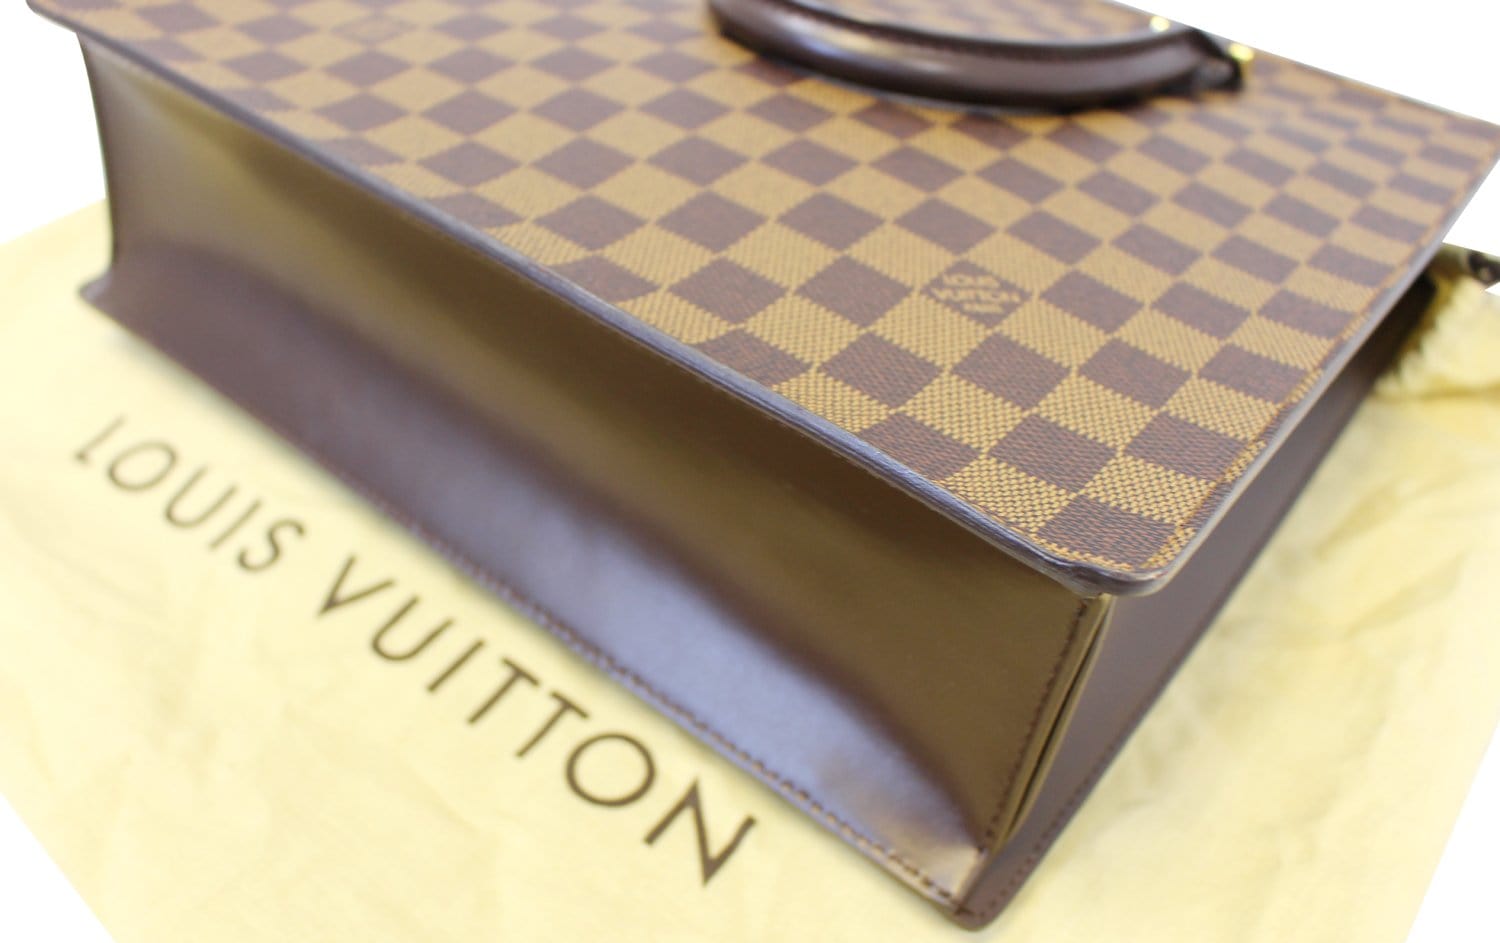 Louis Vuitton Damier Ebene Venice Sac Plat PM Tote